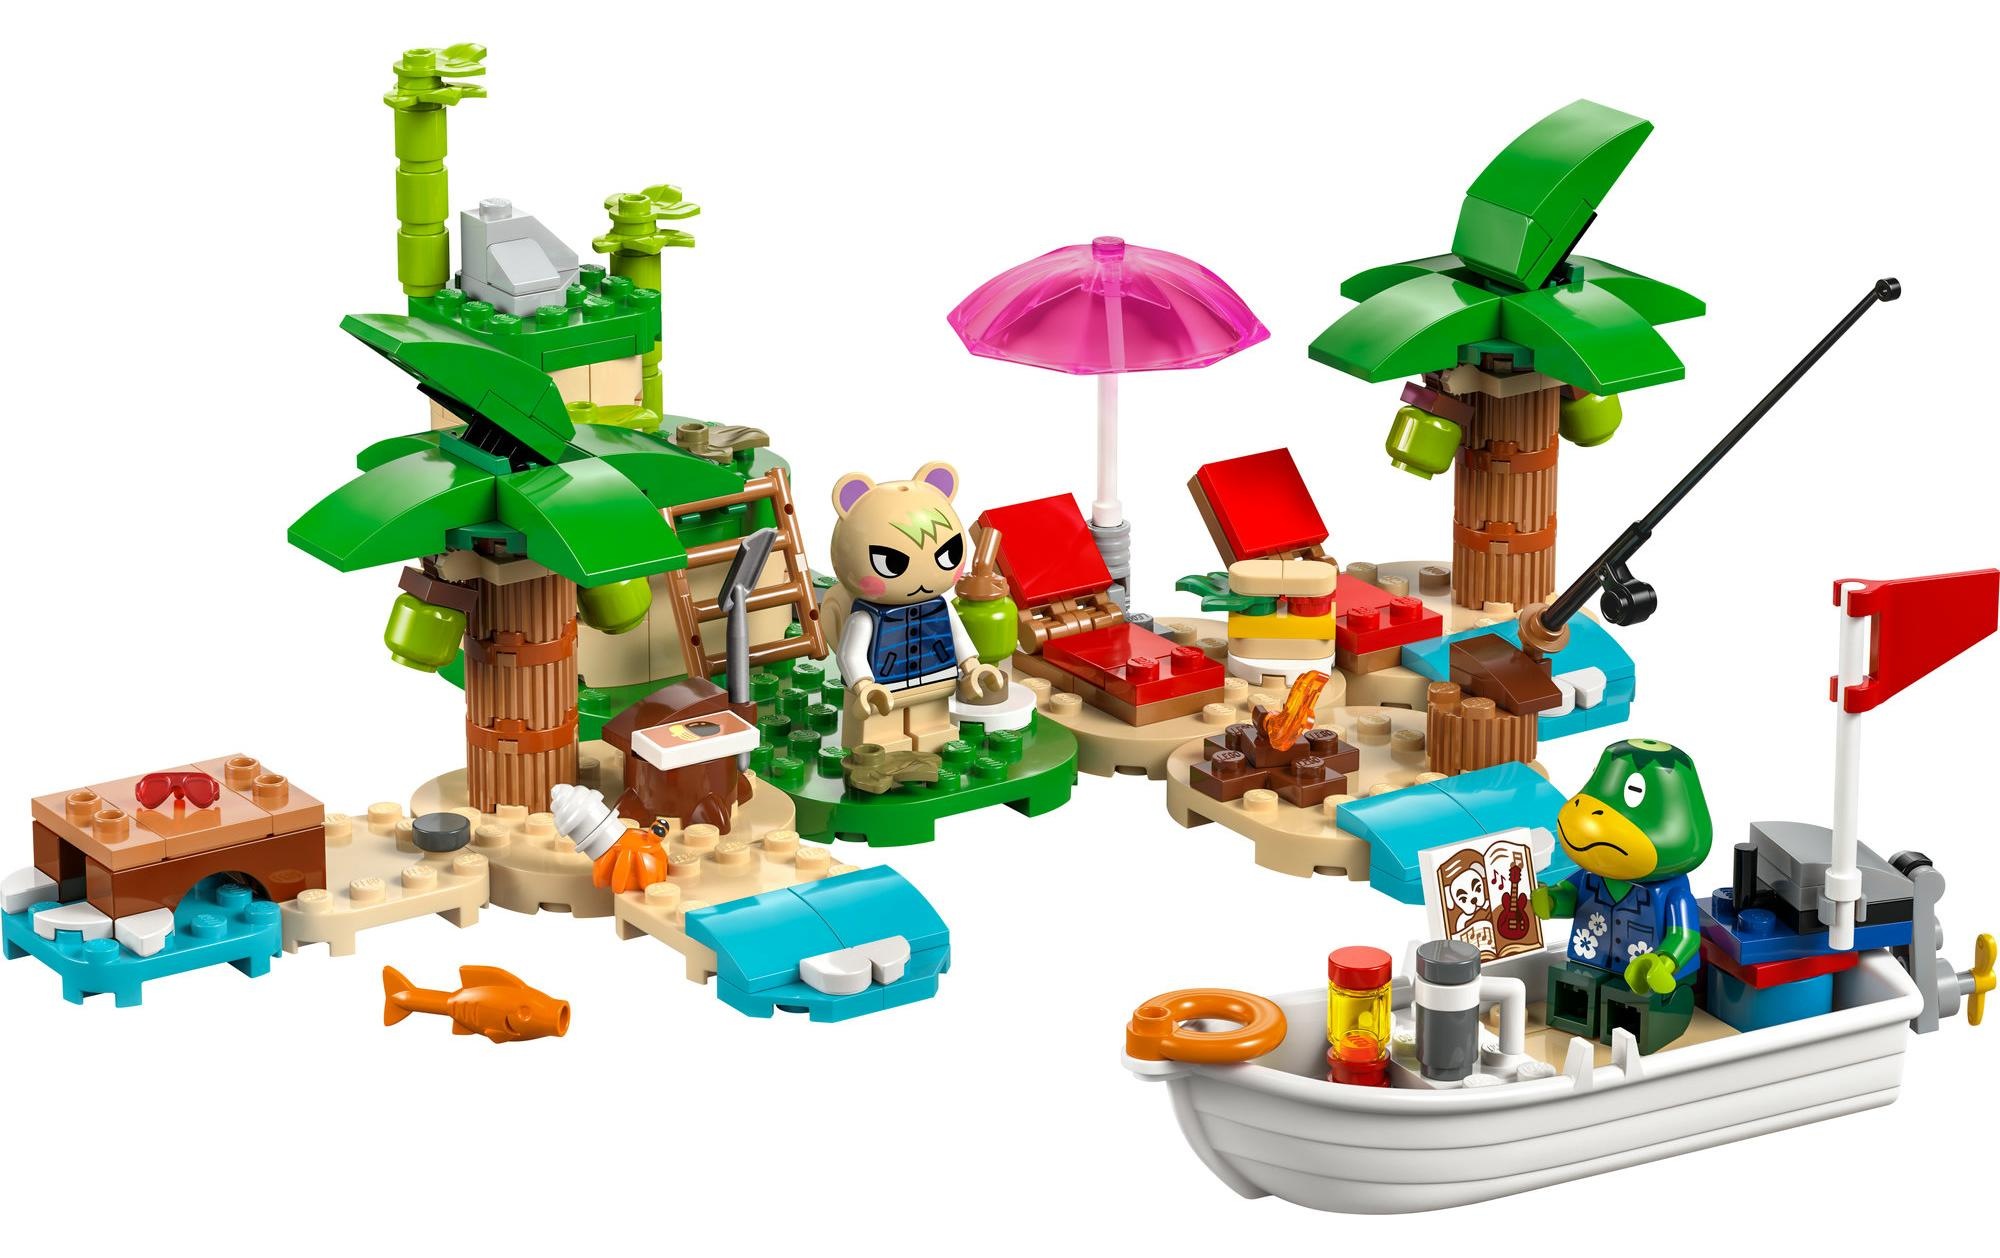 LEGO® Spielbausteine »Animal Crossing Käptens Insel-Bootstour 77048«, (233 St.)